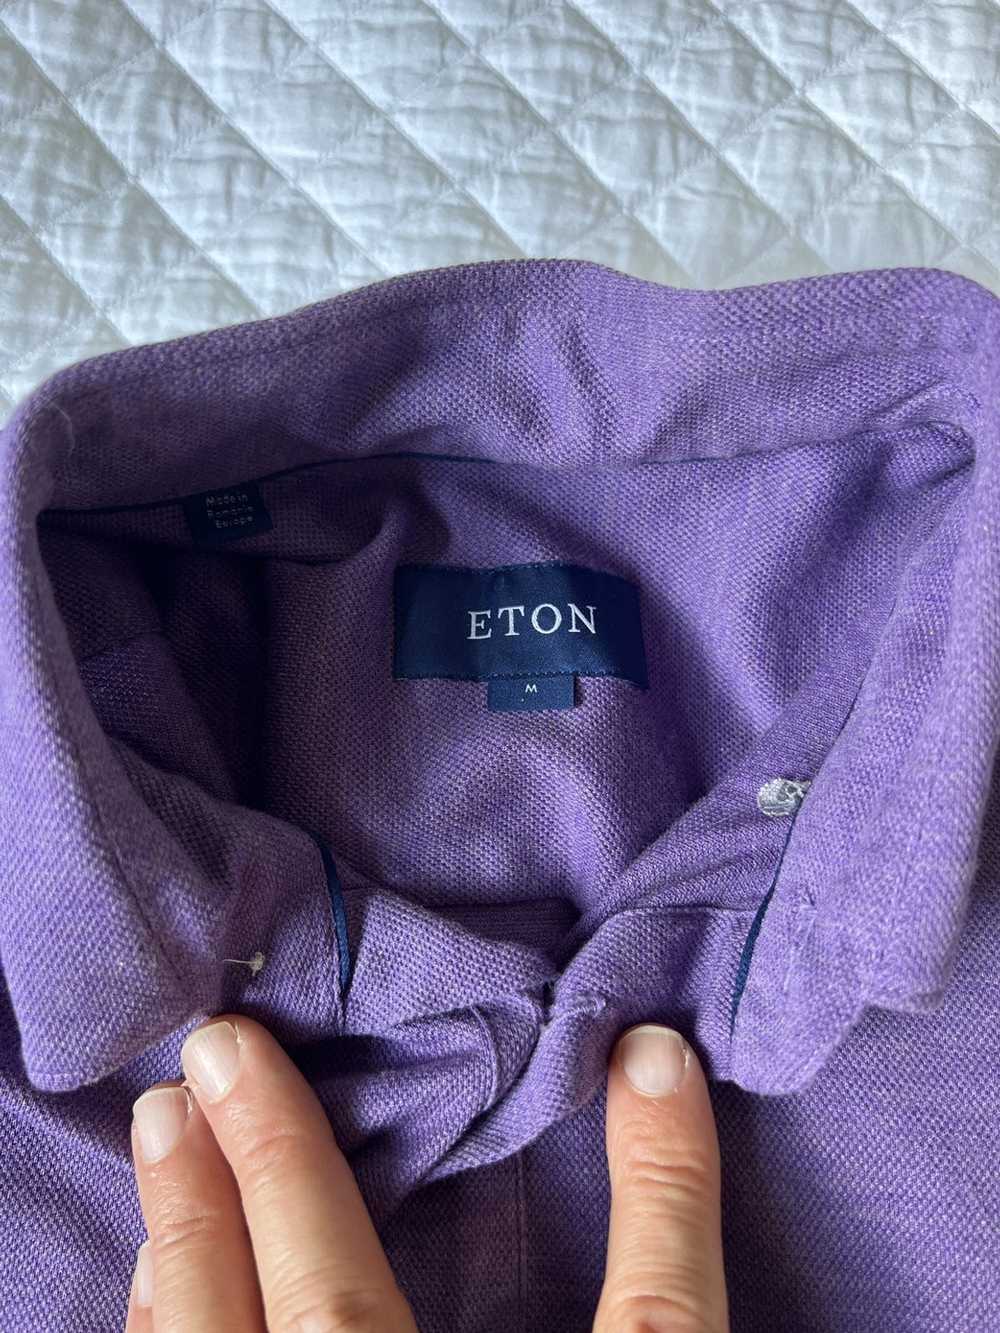 Eton Eton slim fit polo shirt - image 2